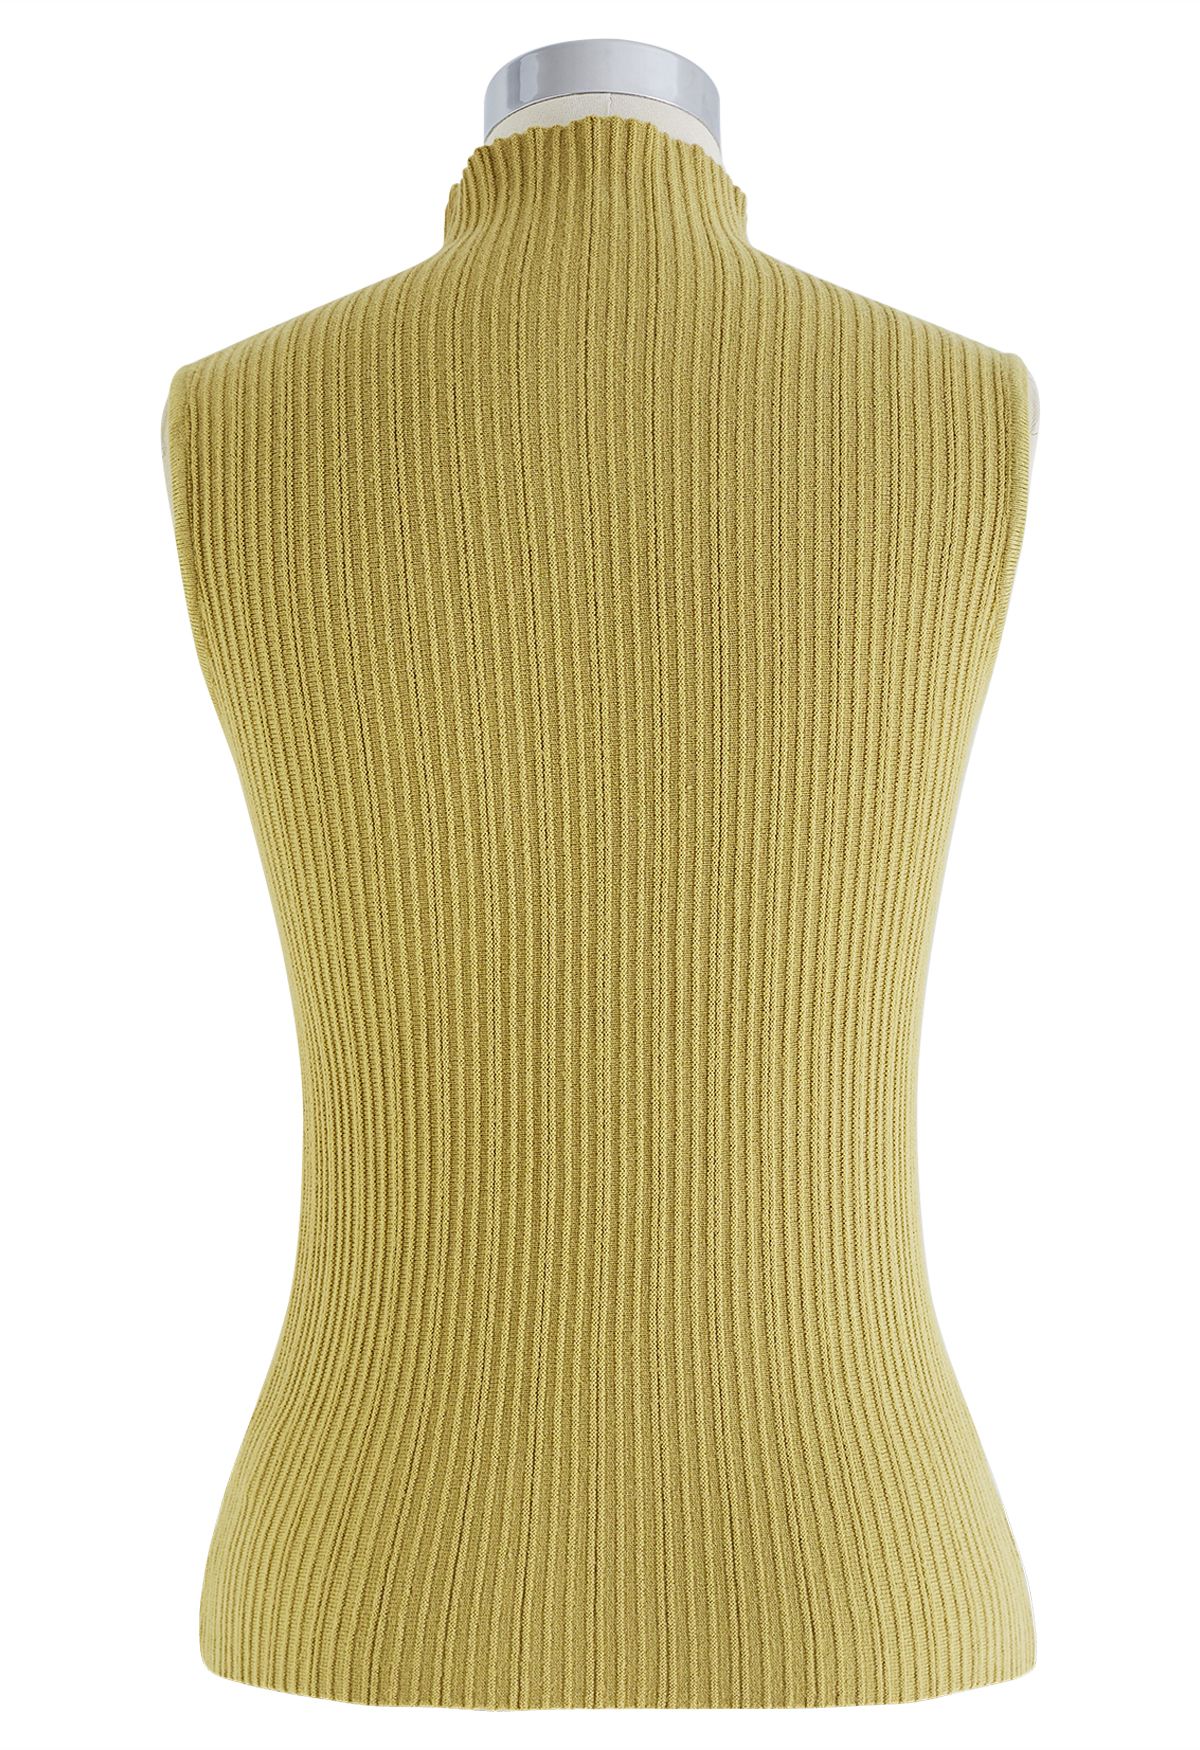 Mock Neck Sleeveless Textured Knit Top in Mustard